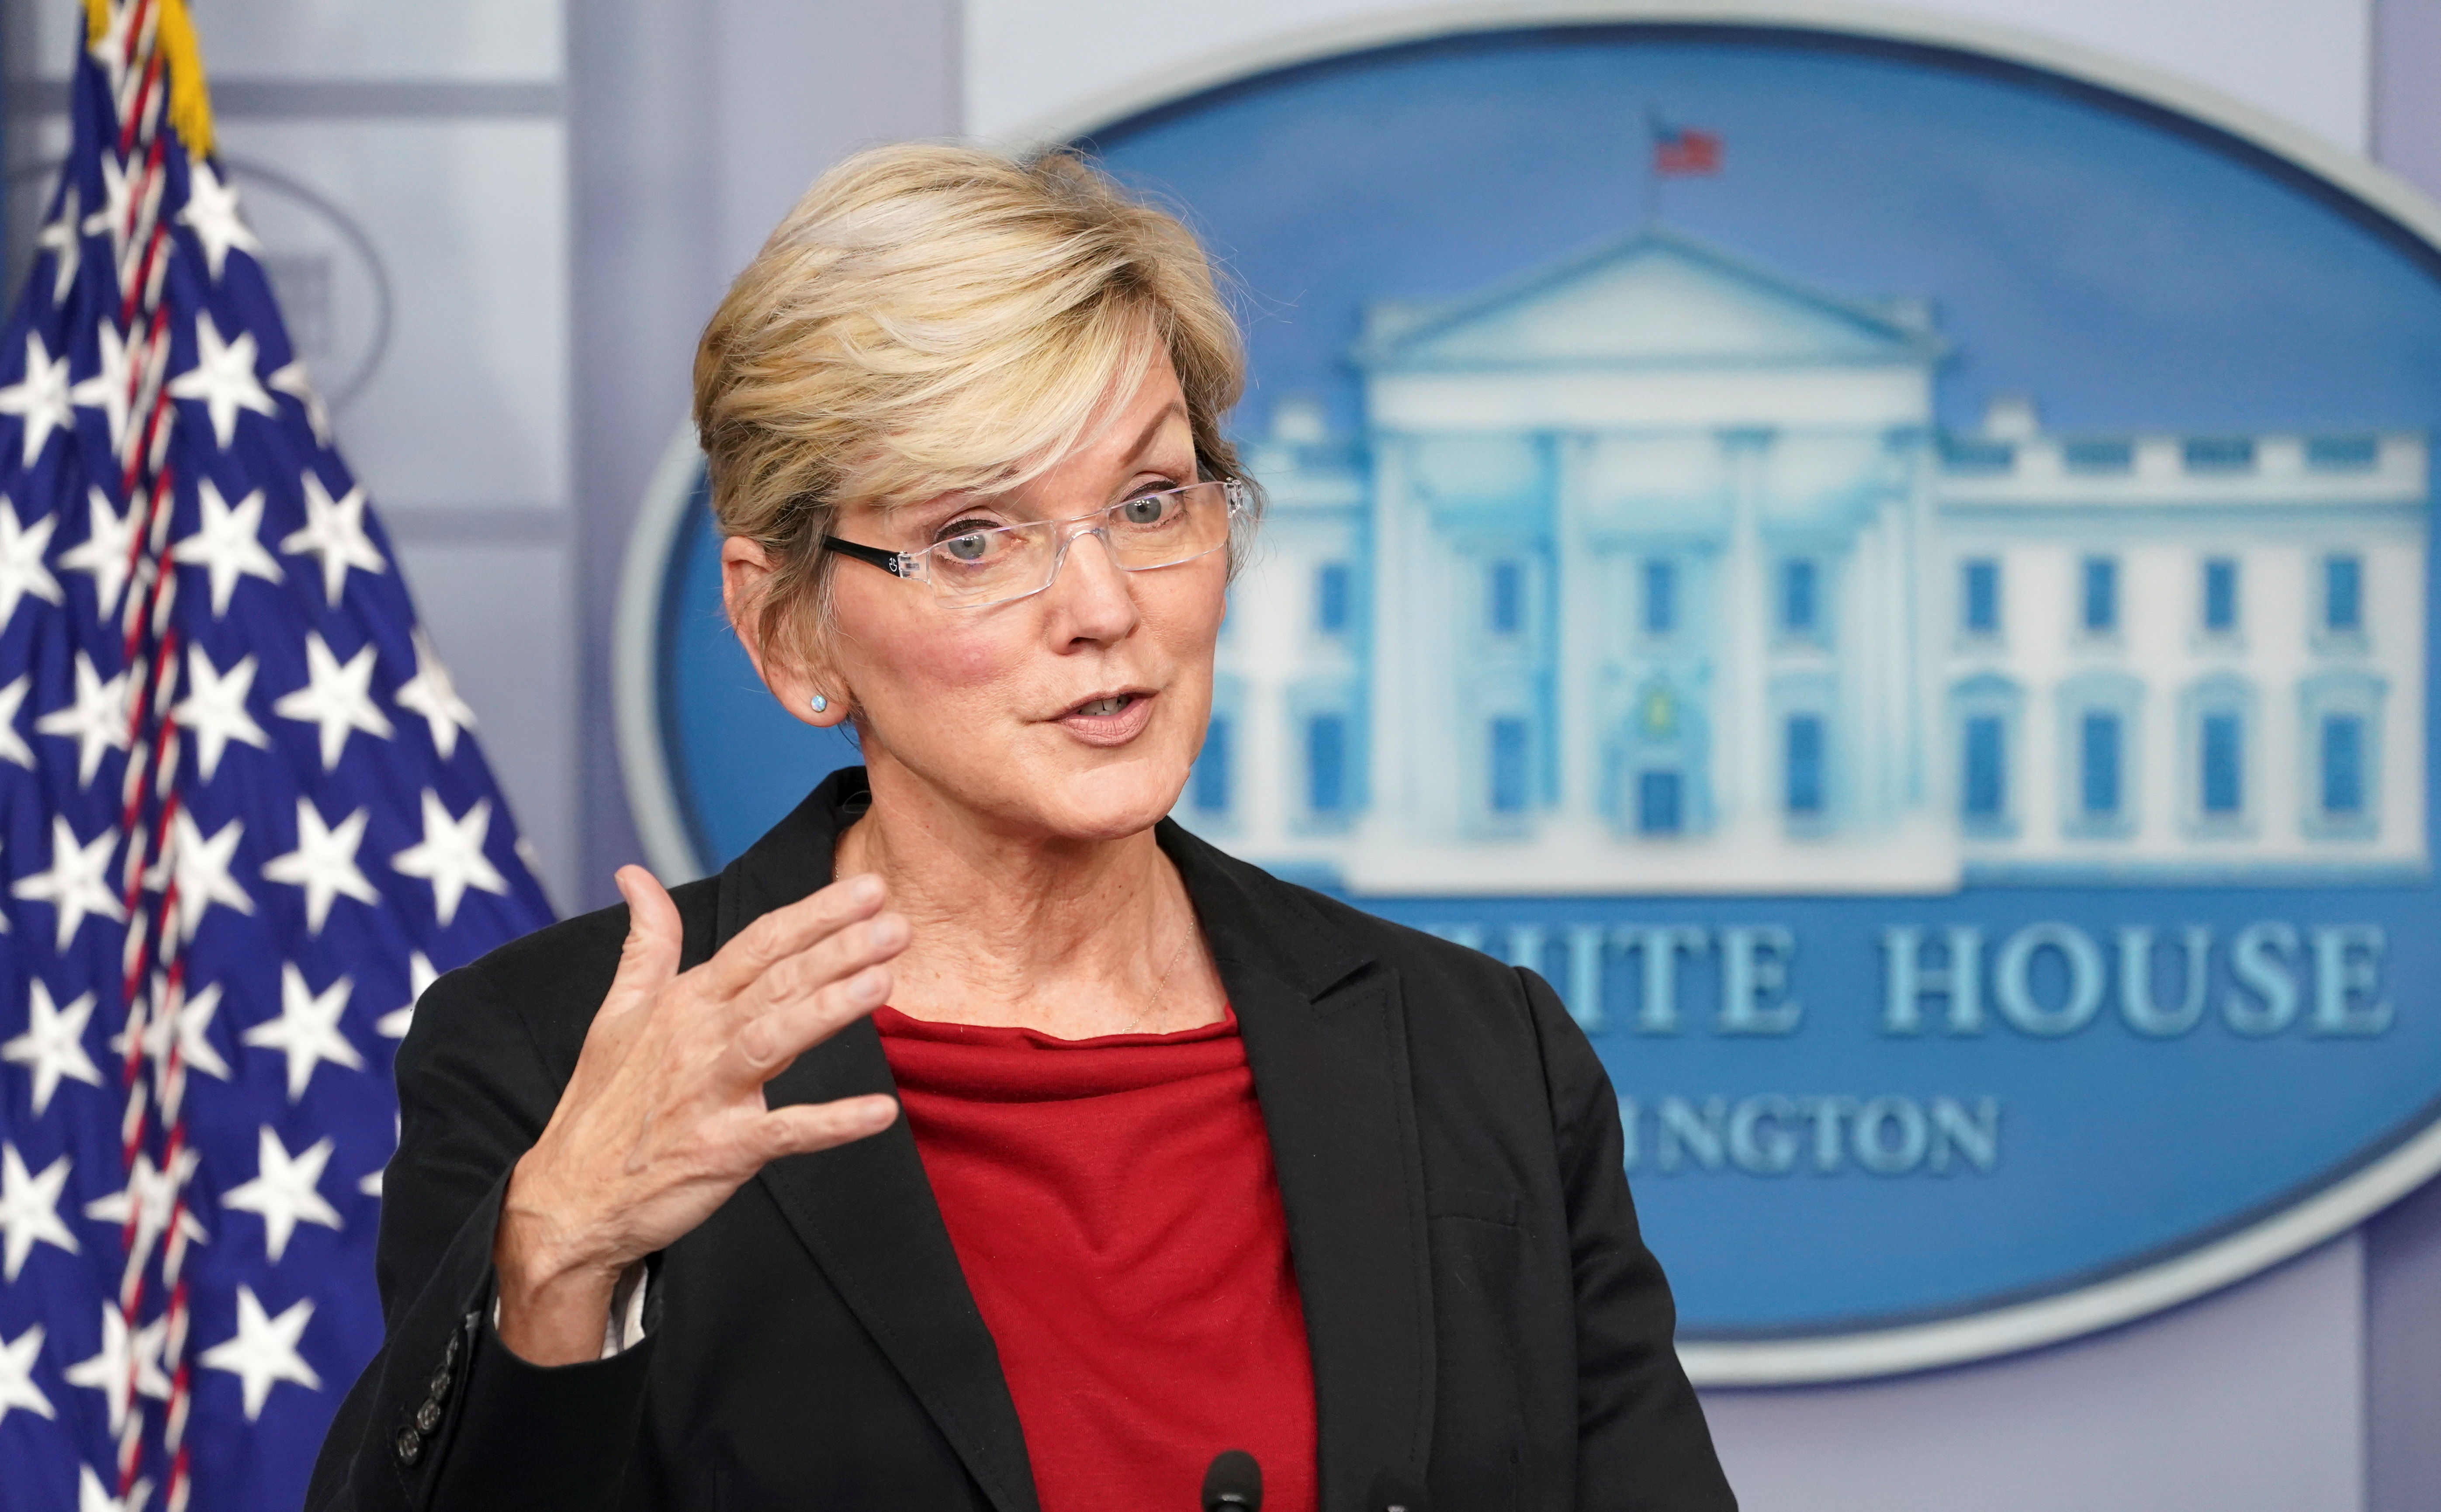 U.S. Secretary of Energy Jennifer Granholm holds press briefing at the White House in Washington